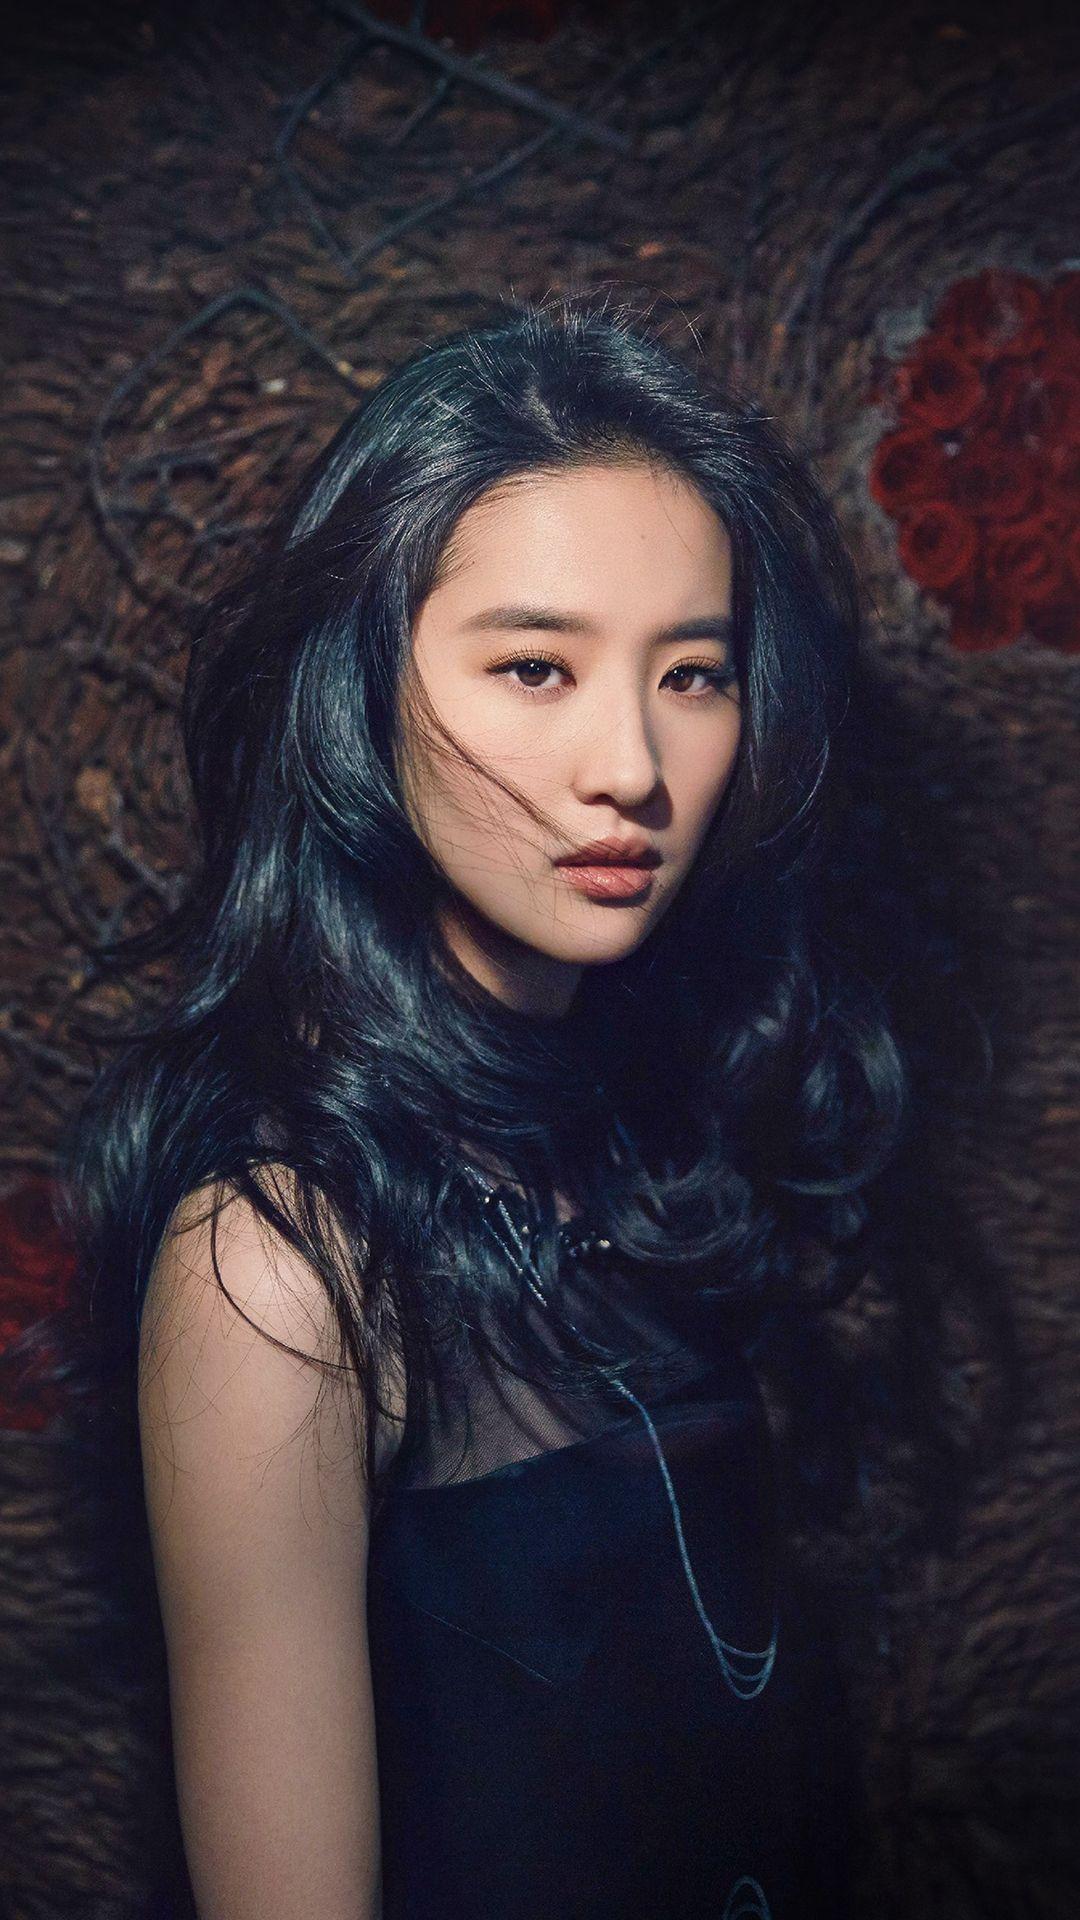 Girl Liu Yifei China Film Actress Model Singer Dark #iPhone